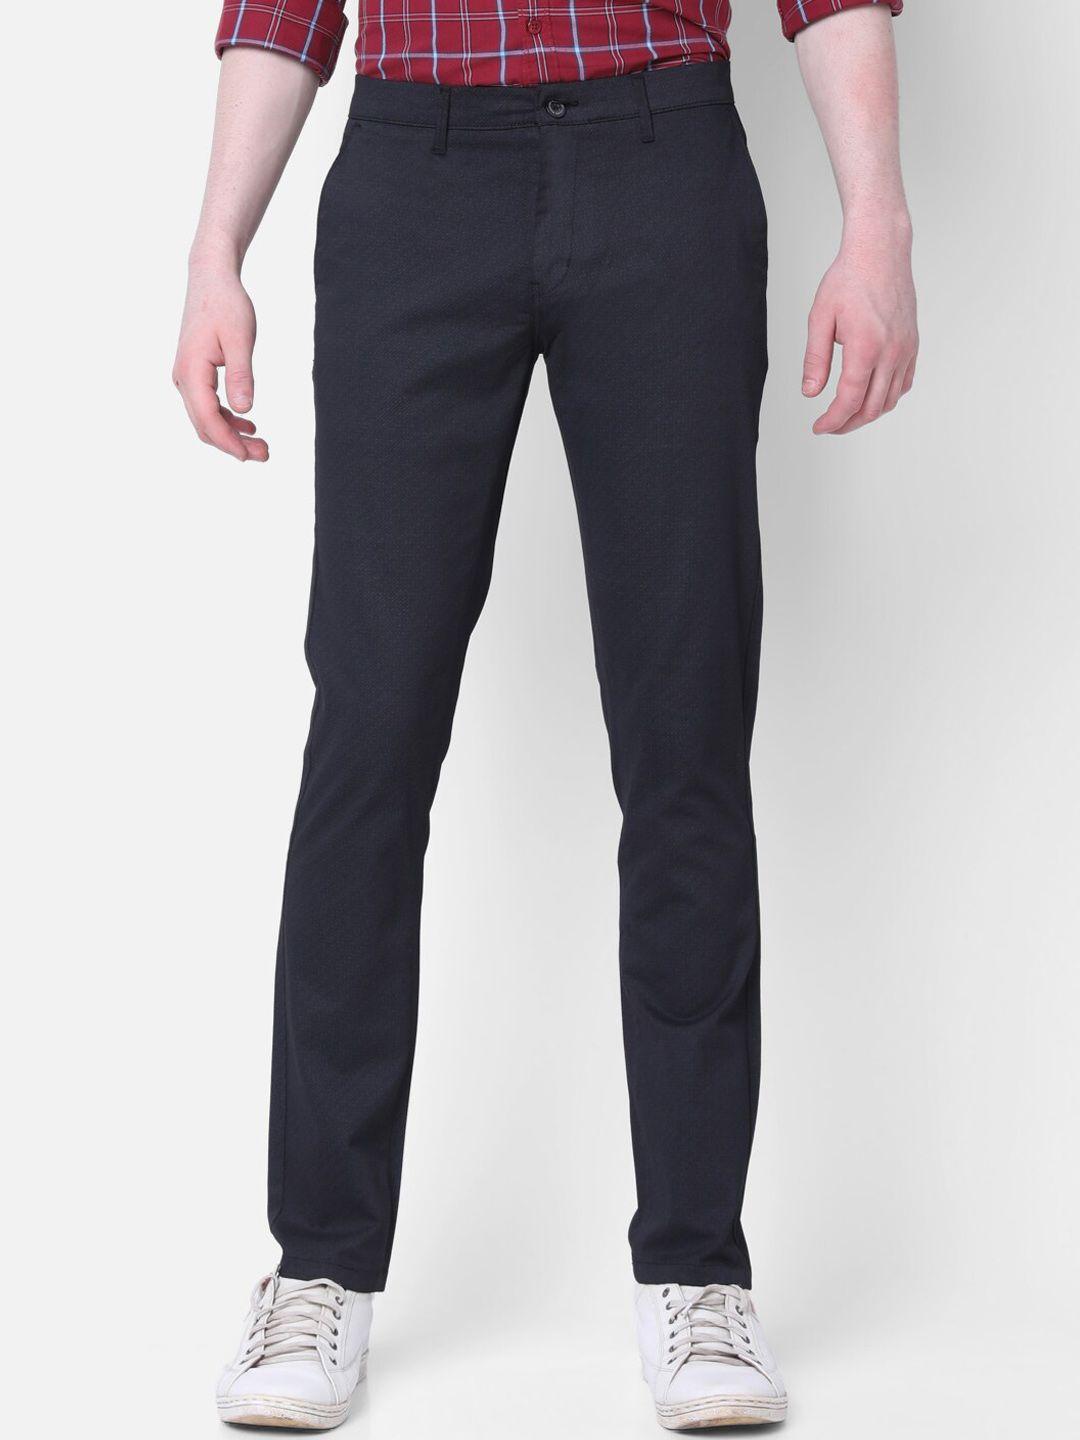 mozzo-men-black-slim-fit-trousers